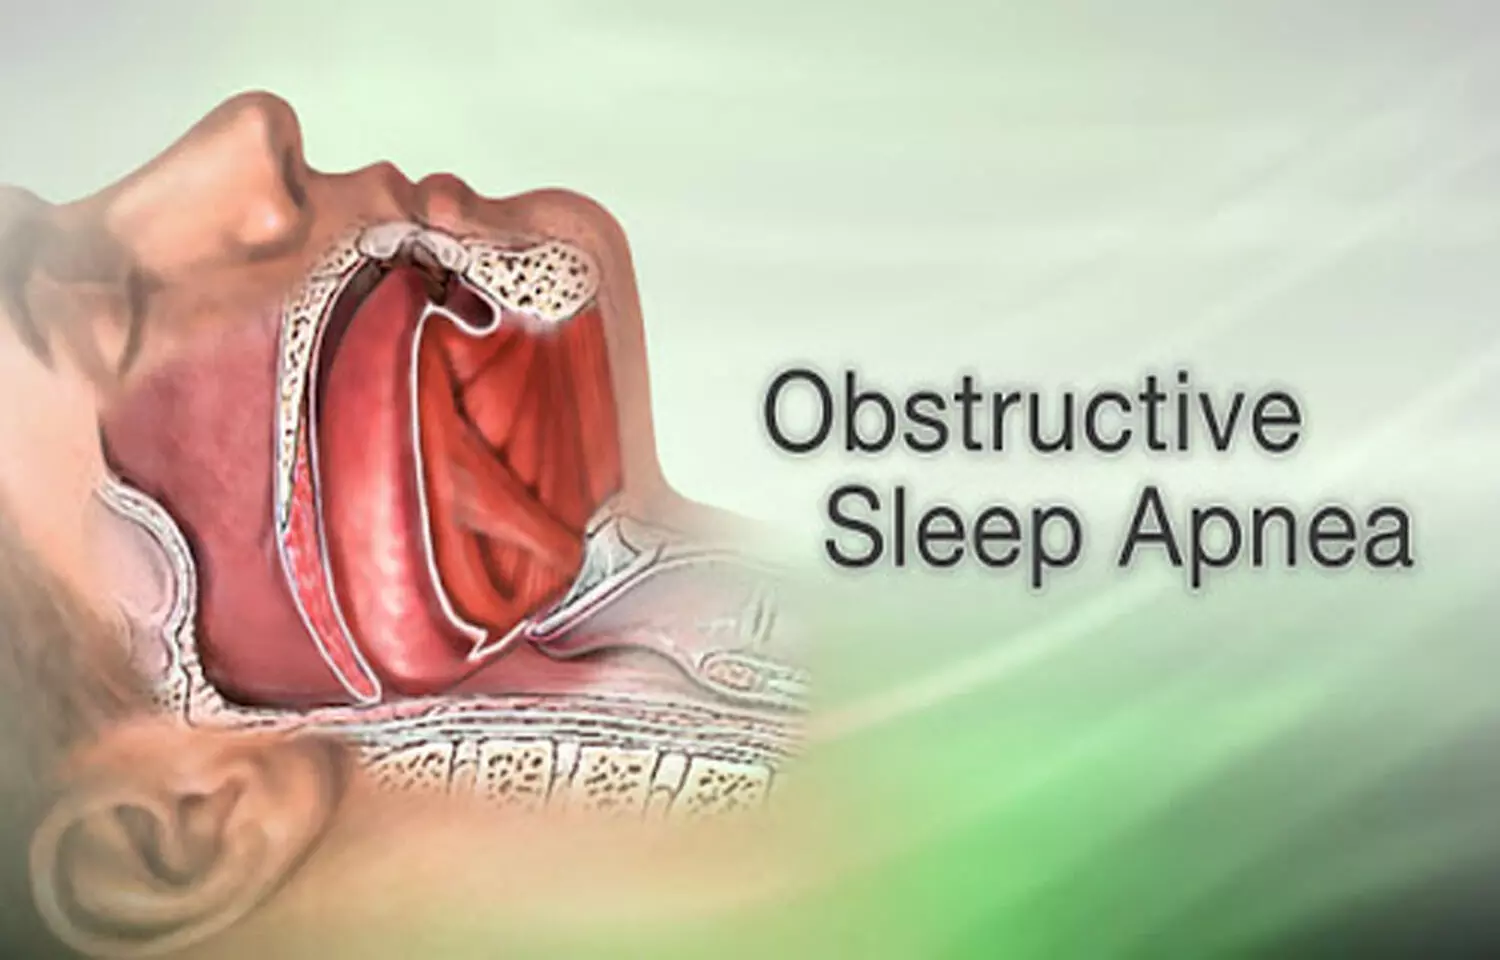 Sleep apnea in kids tied to high blood pressure and adverse heart health: Study